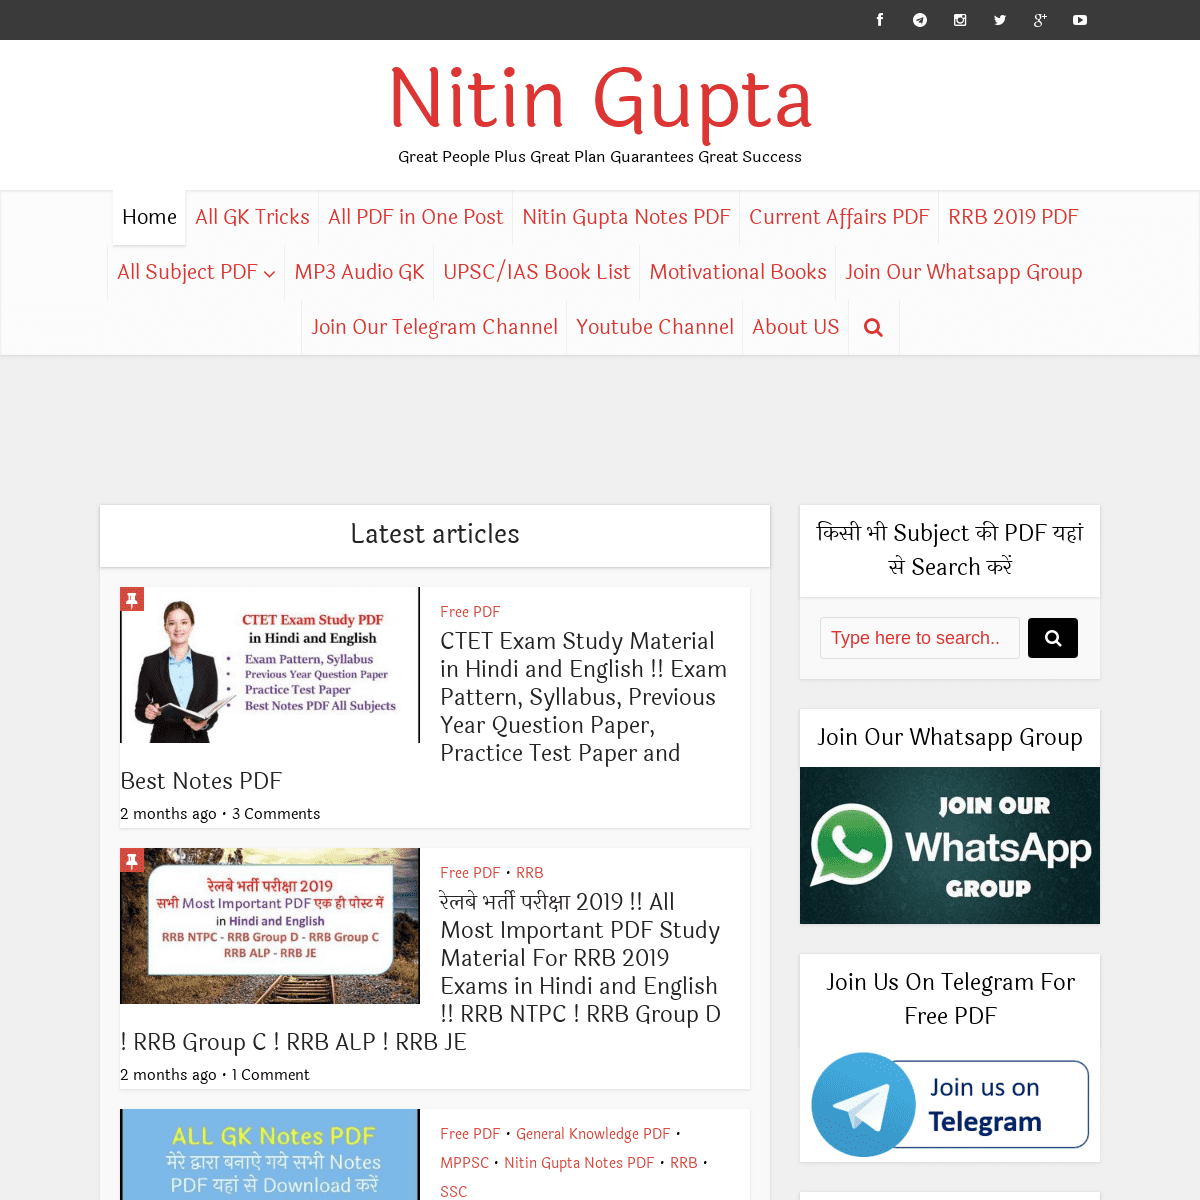 Nitin Gupta - Great People Plus Great Plan Guarantees Great Success